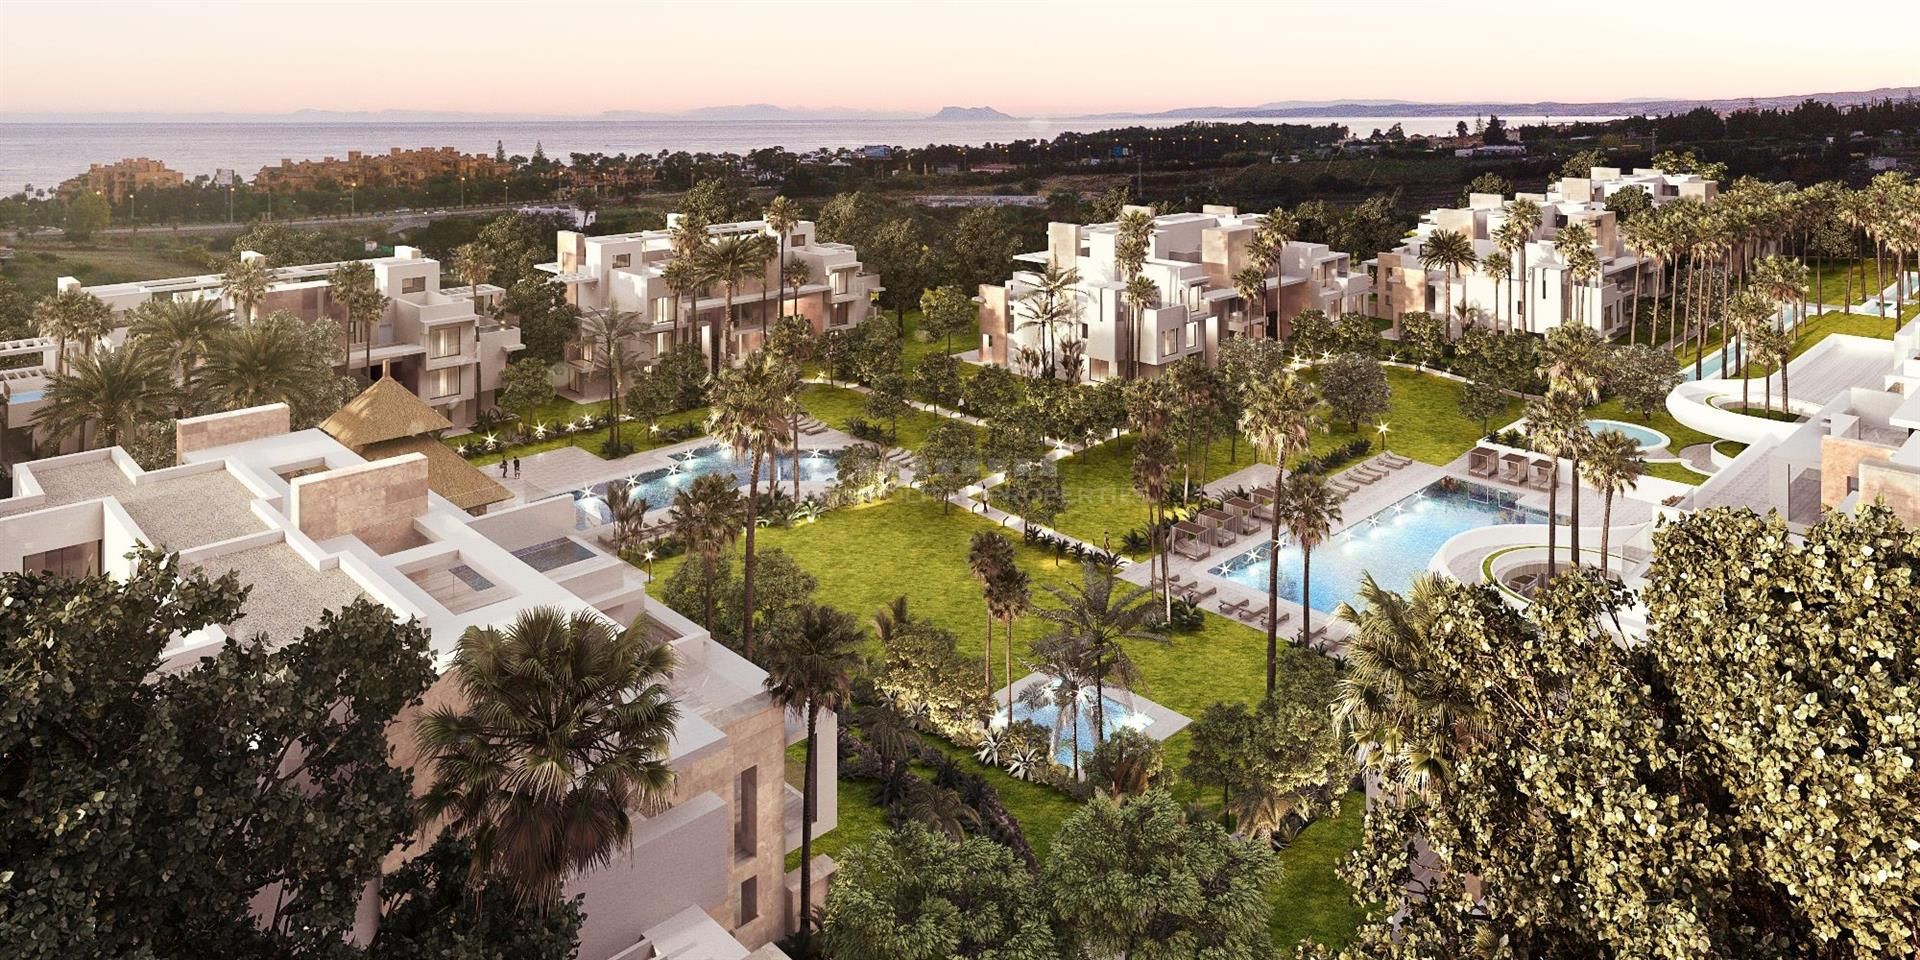 Ayana brings a unique concept in resort development to te Costa del Sol